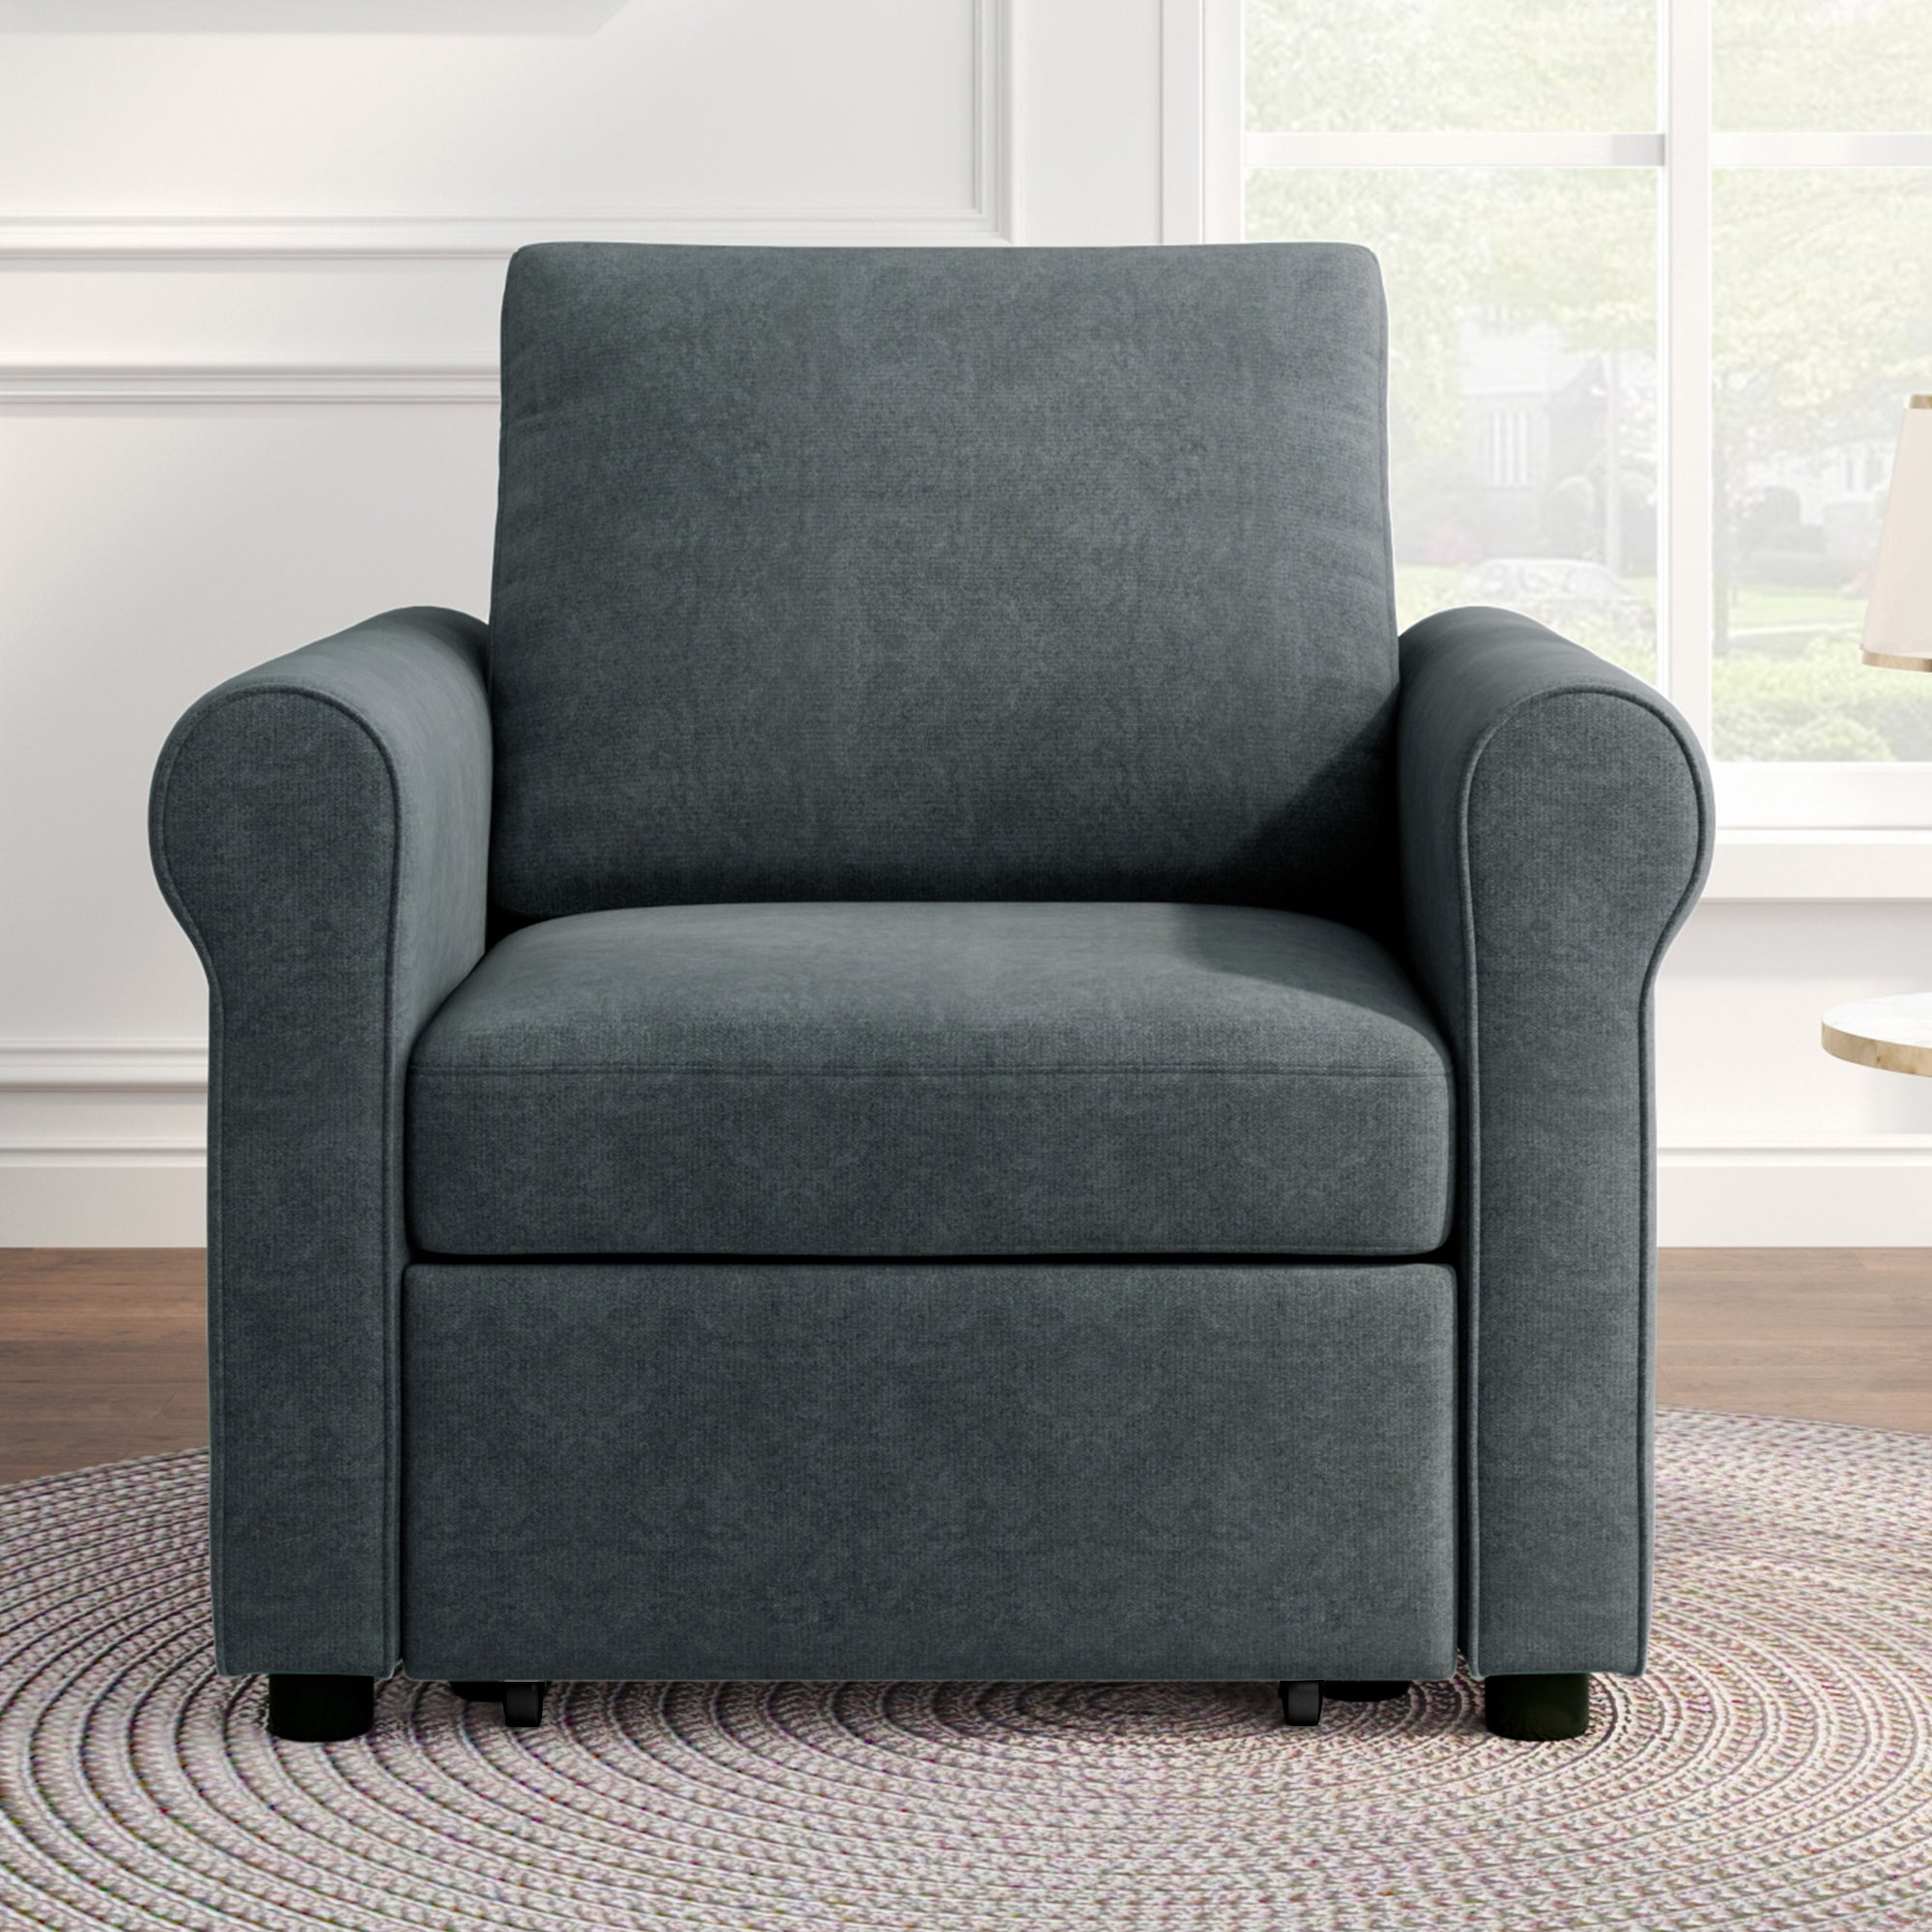 3 in 1 Sofa Bed Chair, Convertible Sleeper Chair dark blue-linen